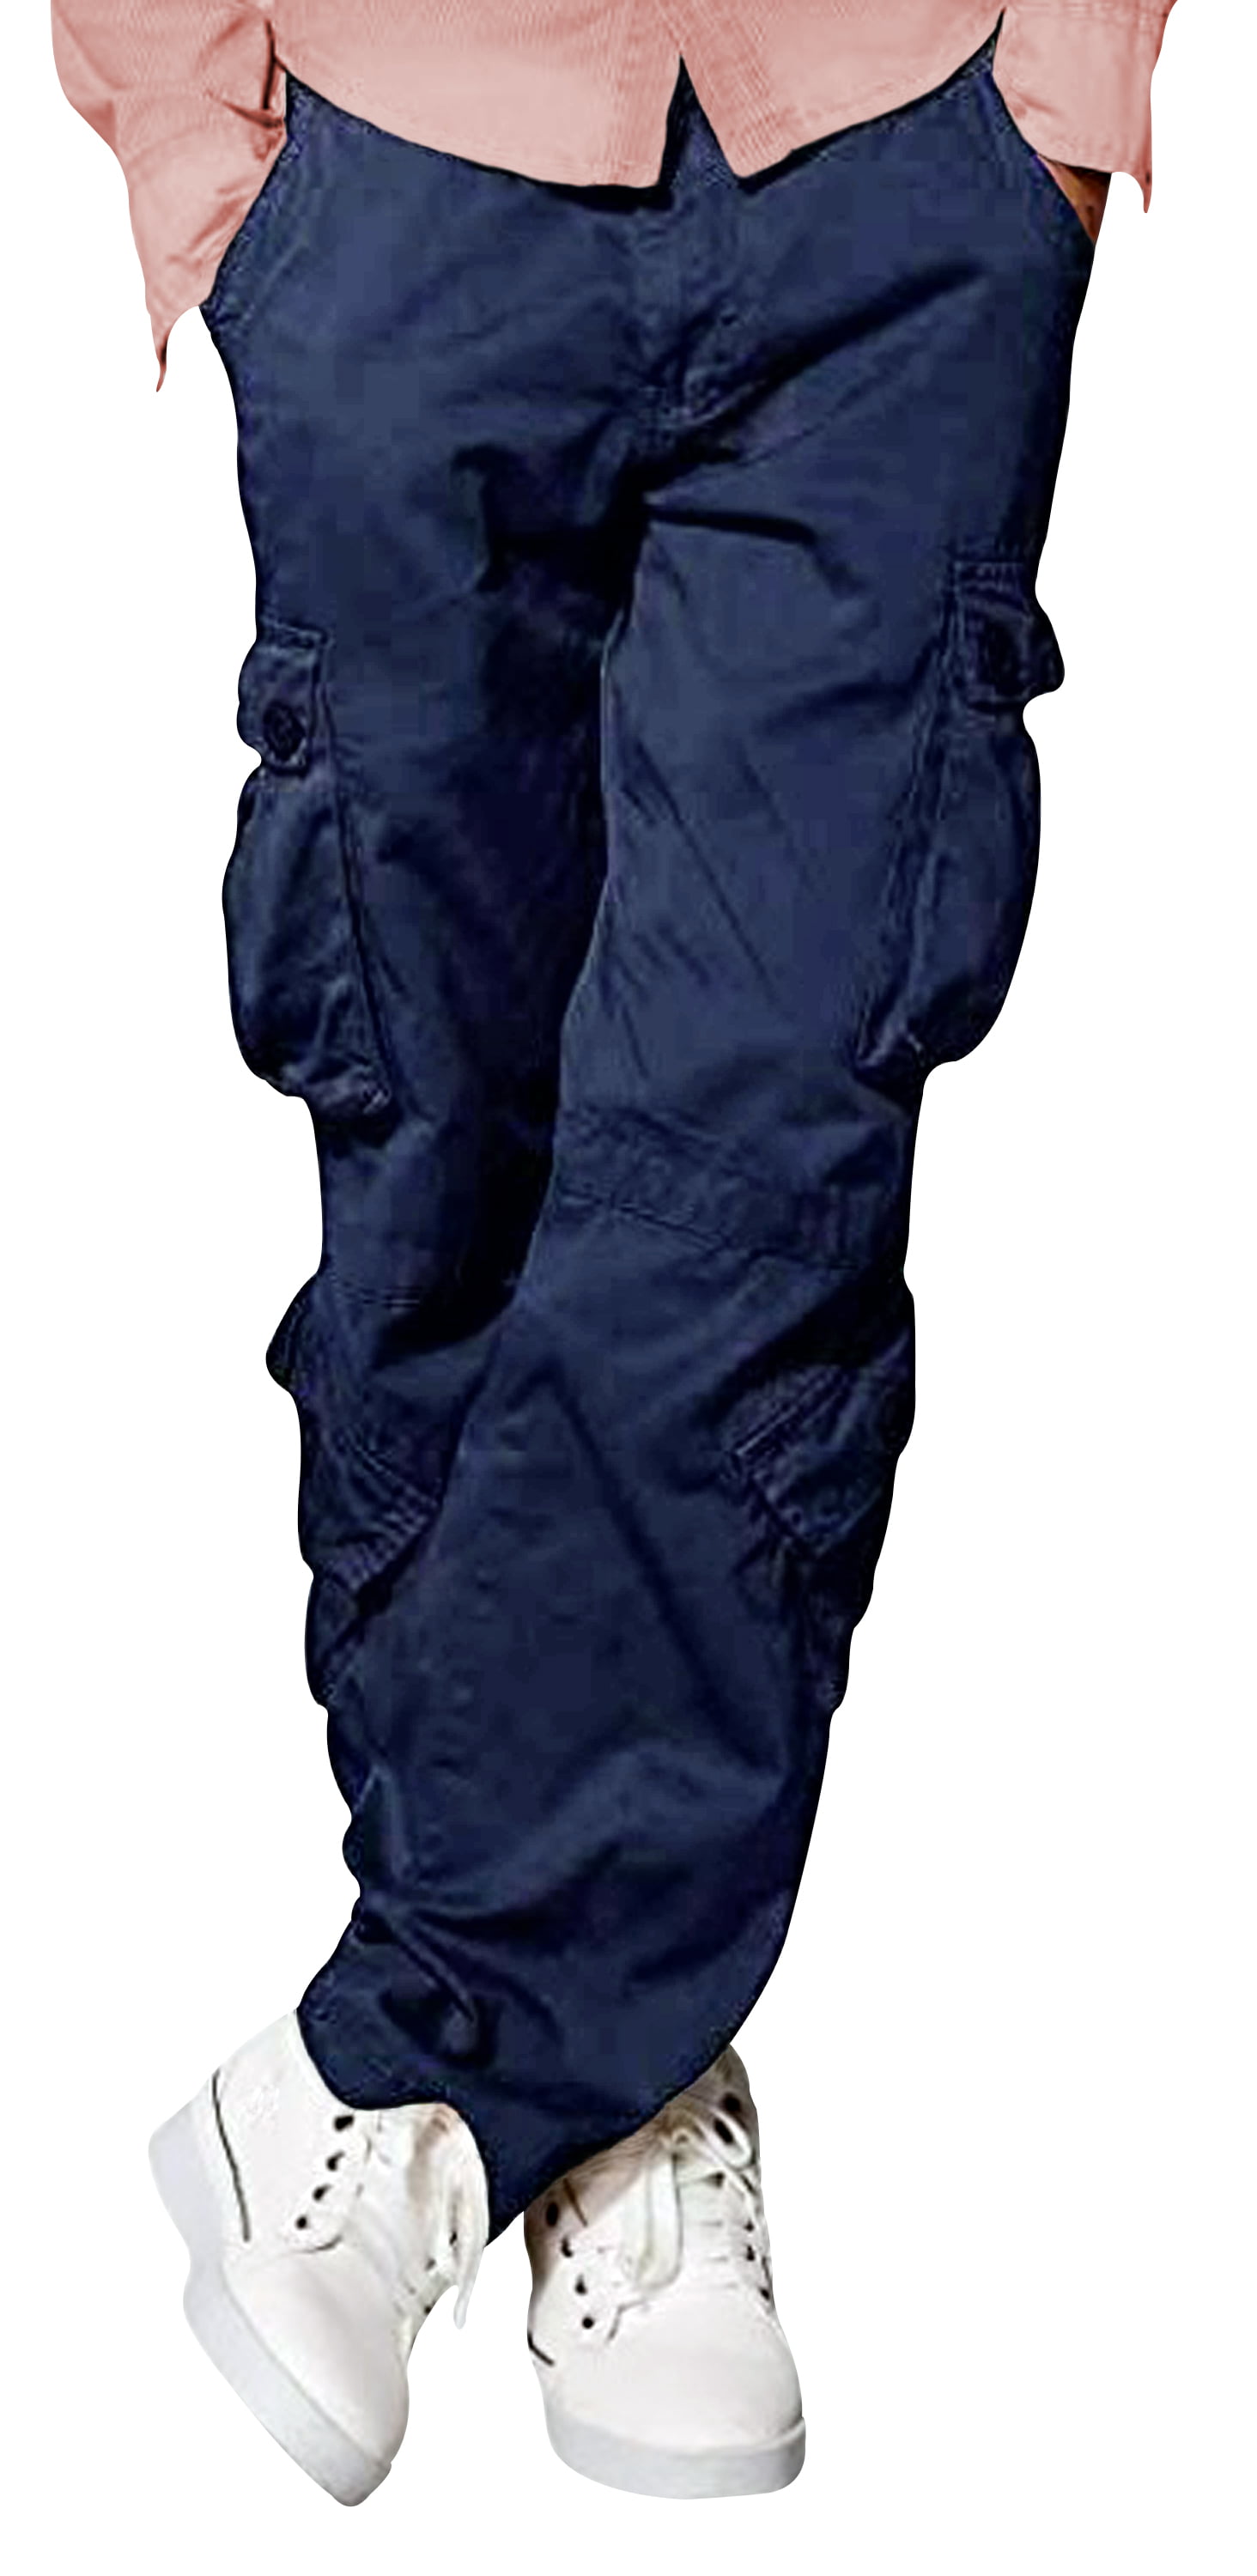 Men's Cotton Camouflage Cargo Combat Work Pockets Long Pants Trousers Lot 